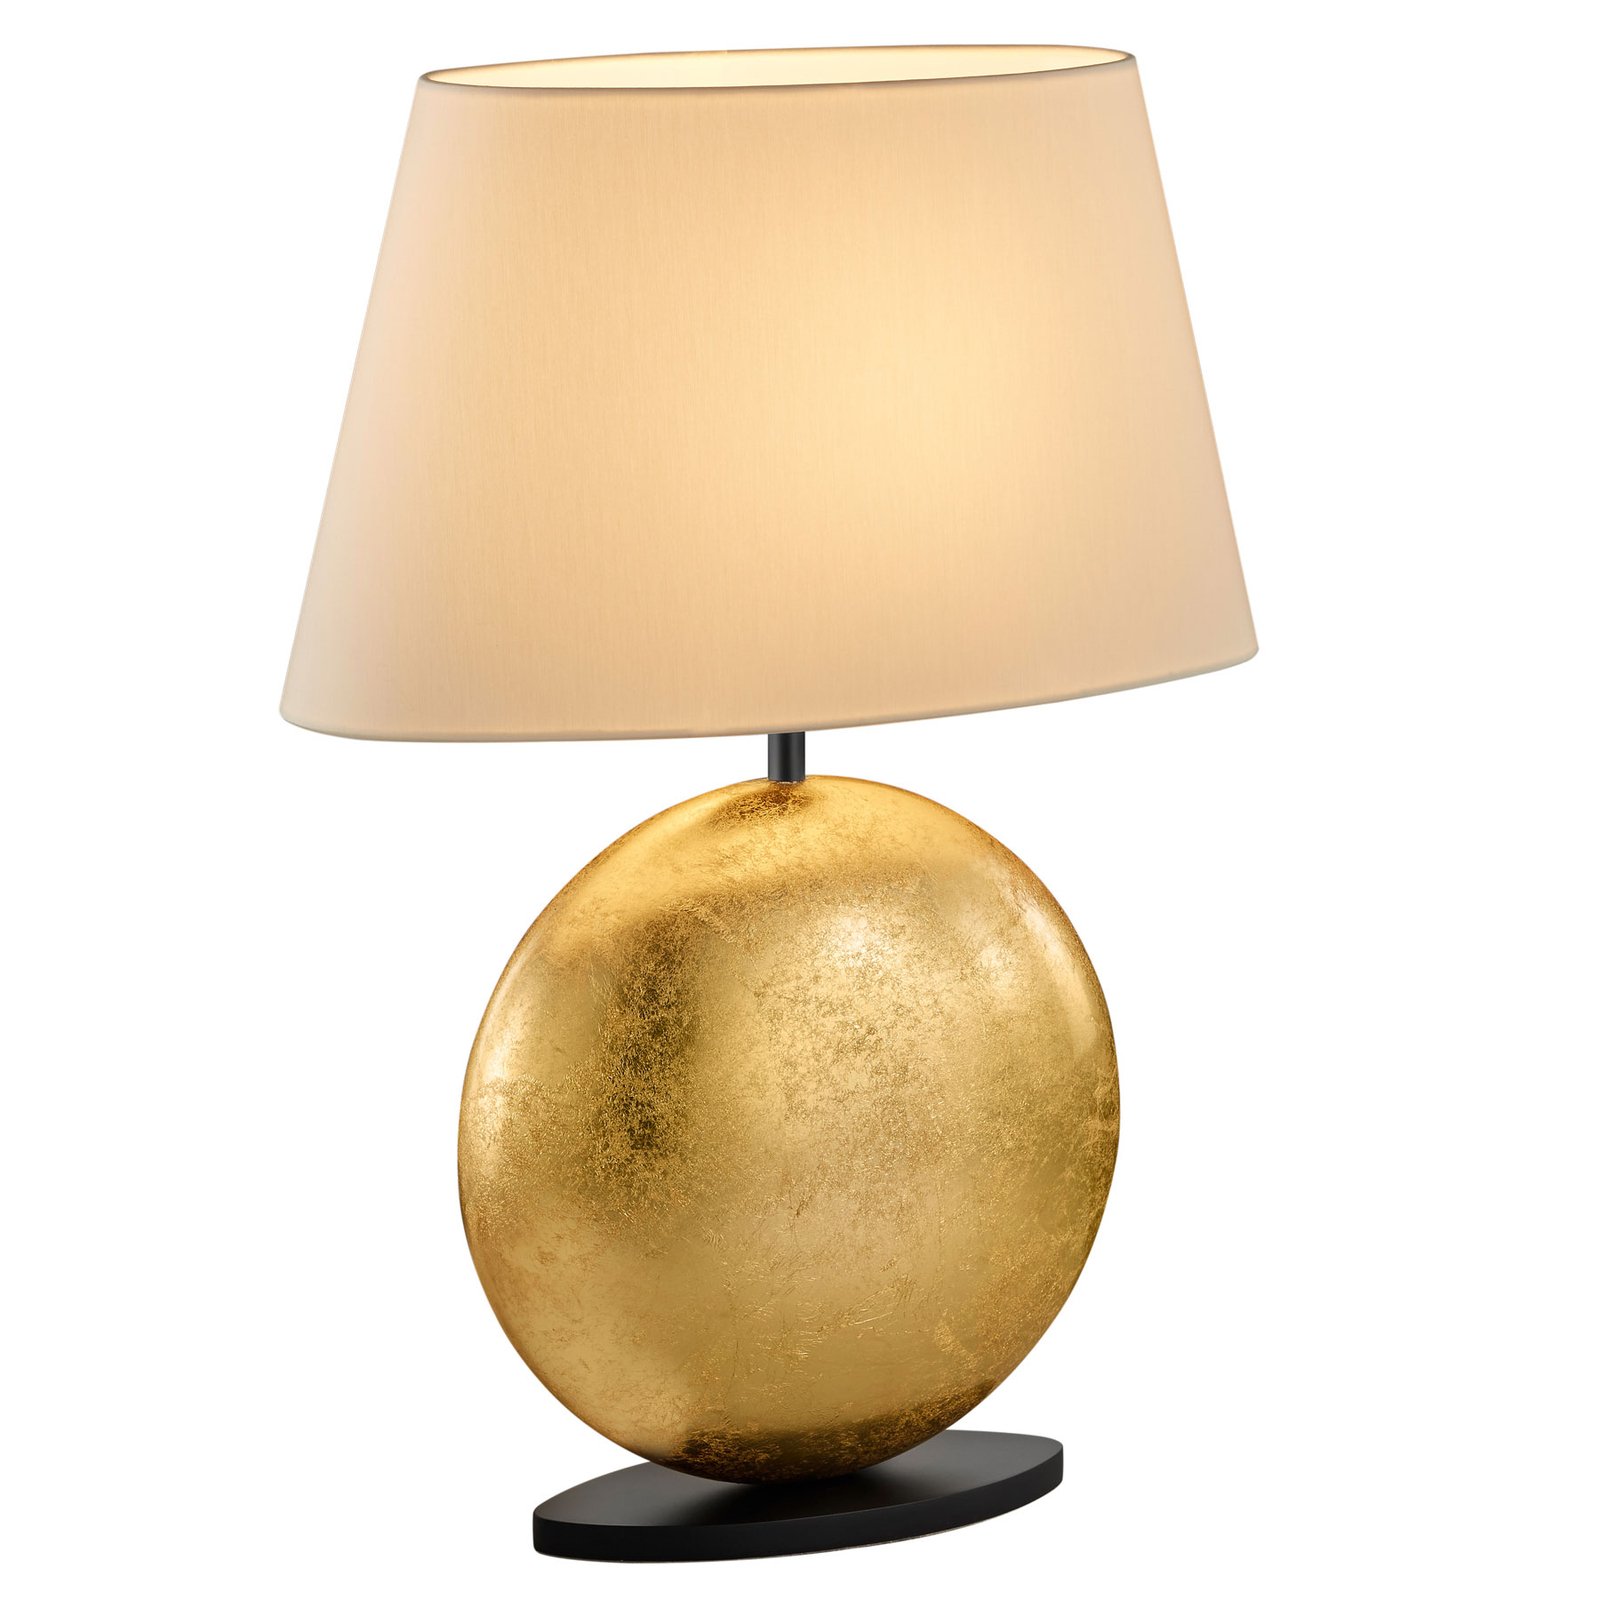 BANKAMP Mali table lamp, cream/gold, height 51 cm